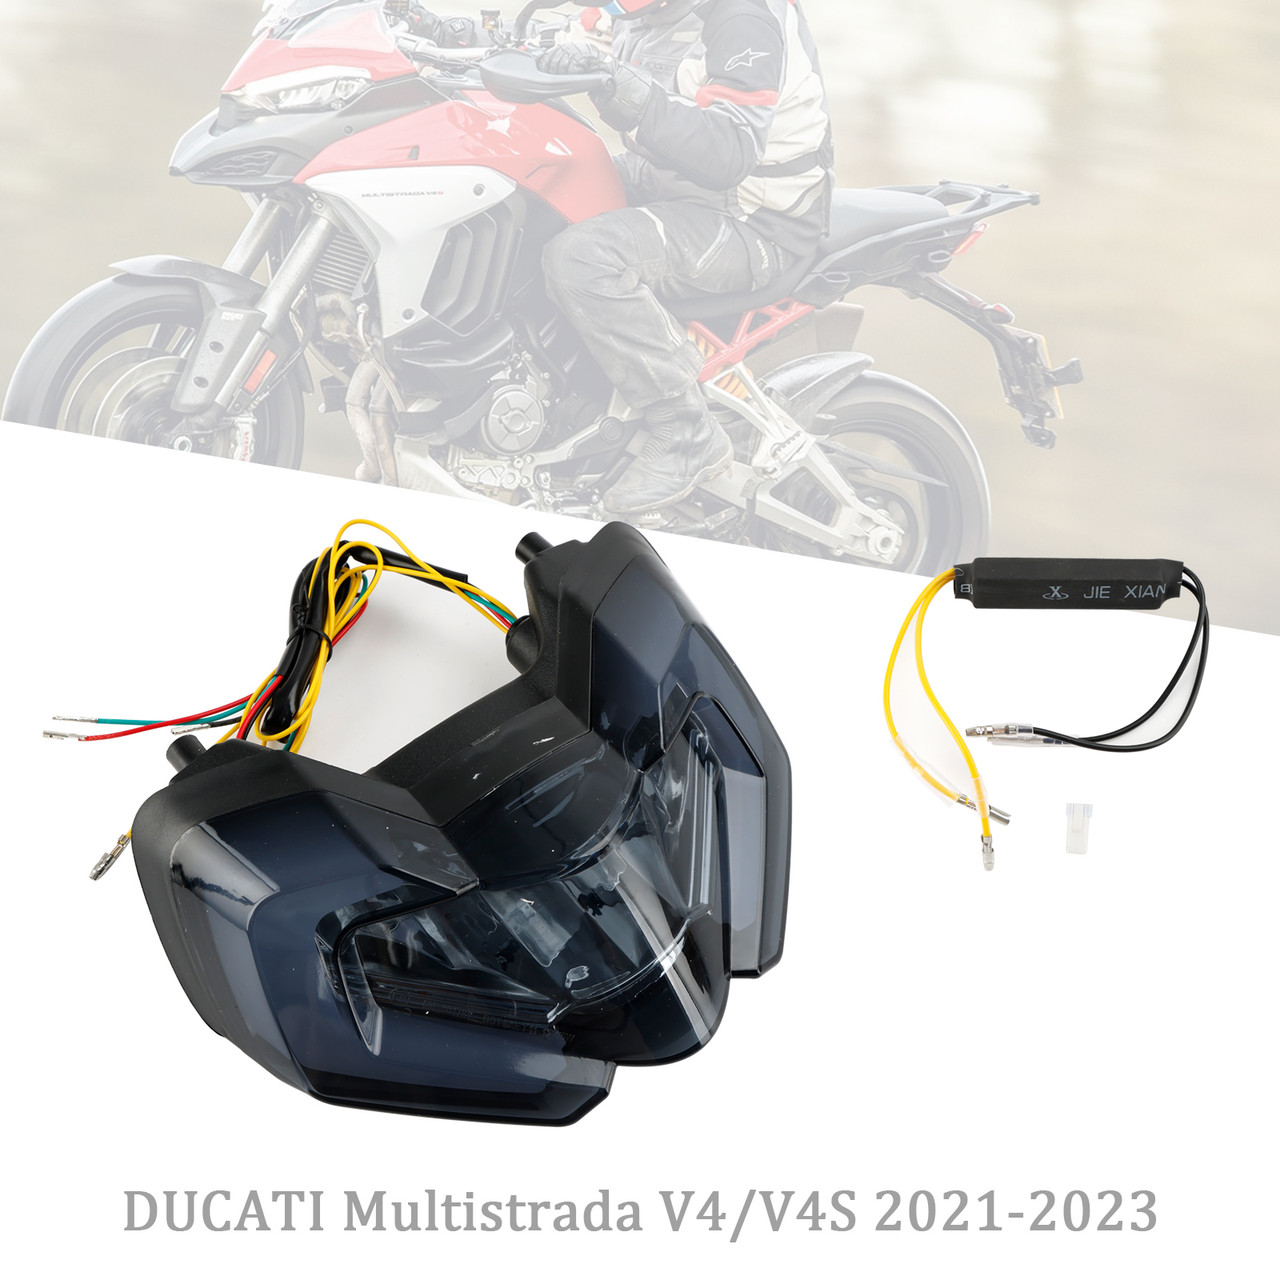 Tail Light Integrated Turn Signals For DUCATI Multistrada V4S V4 110 21-23 Black